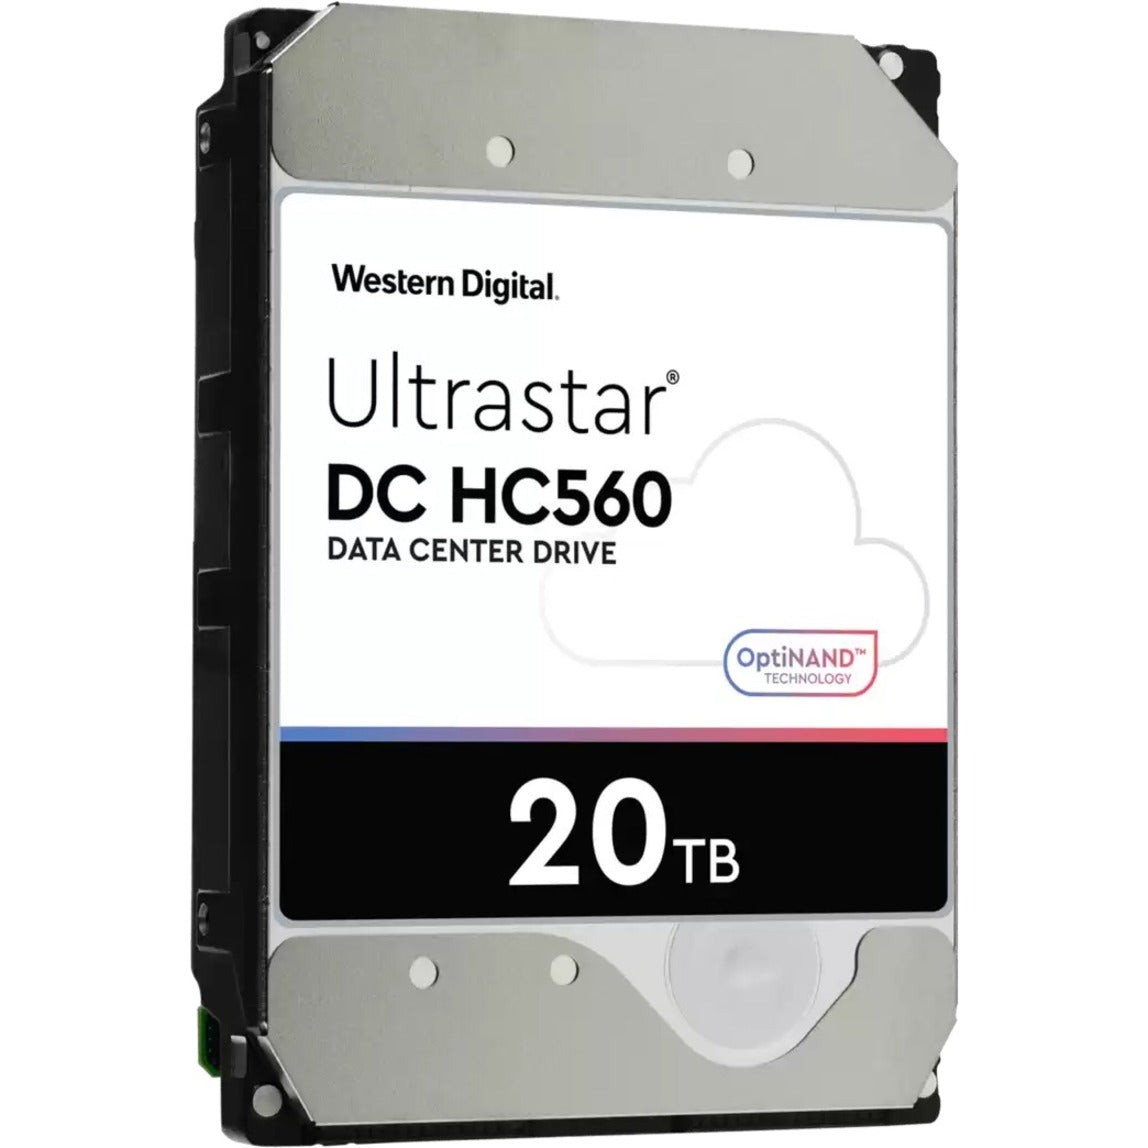 WD Ultrastar DC HC560 20 TB Hard Drive - 3.5" Internal - SATA - CMR Method [Discontinued]